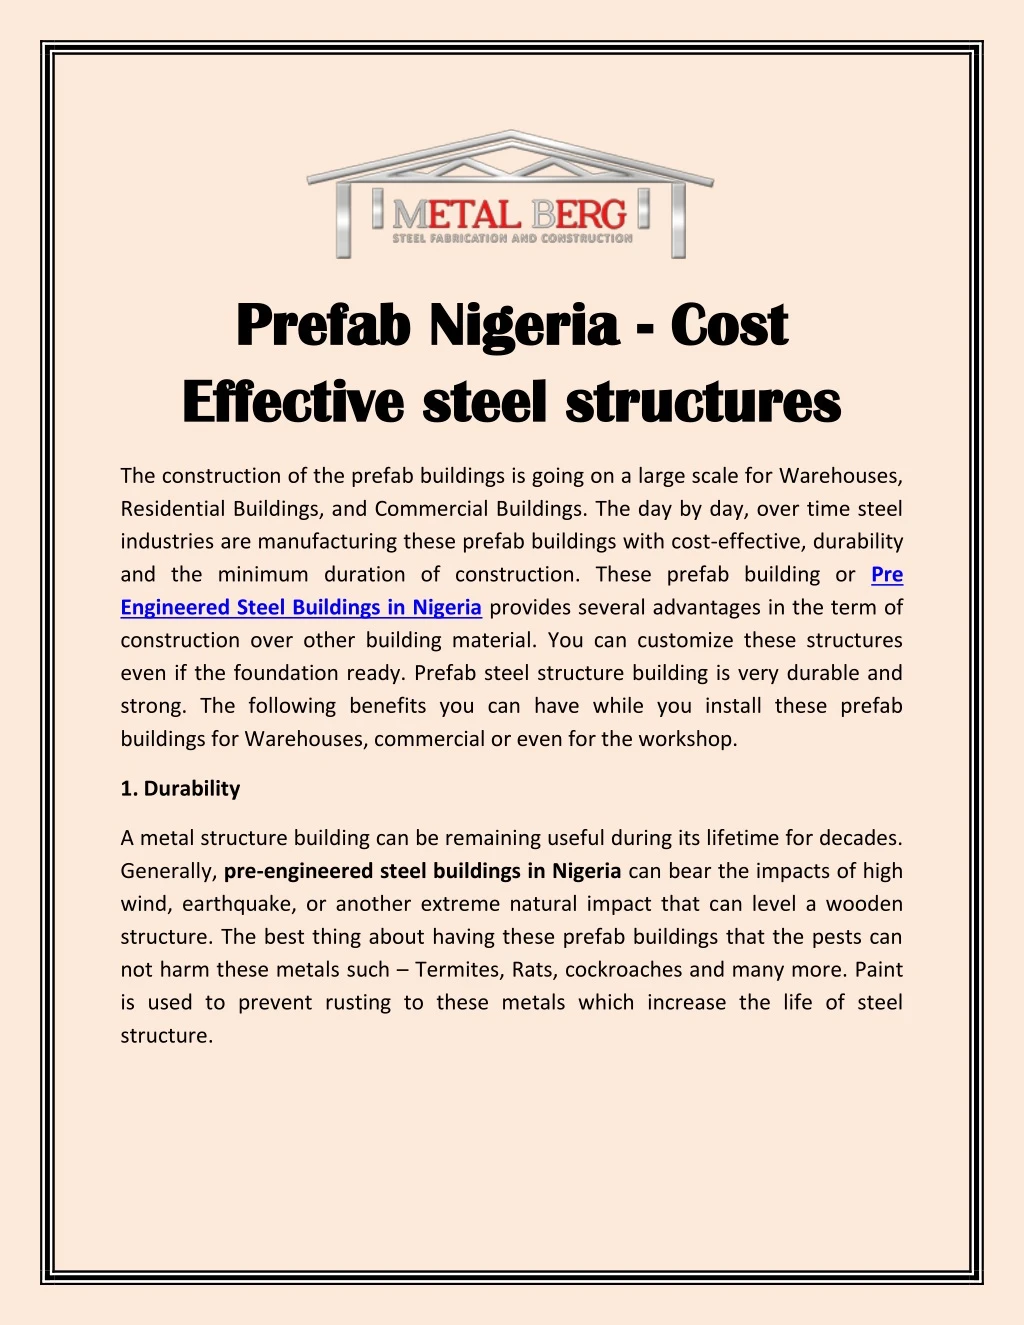 prefab nigeria prefab nigeria cost effective